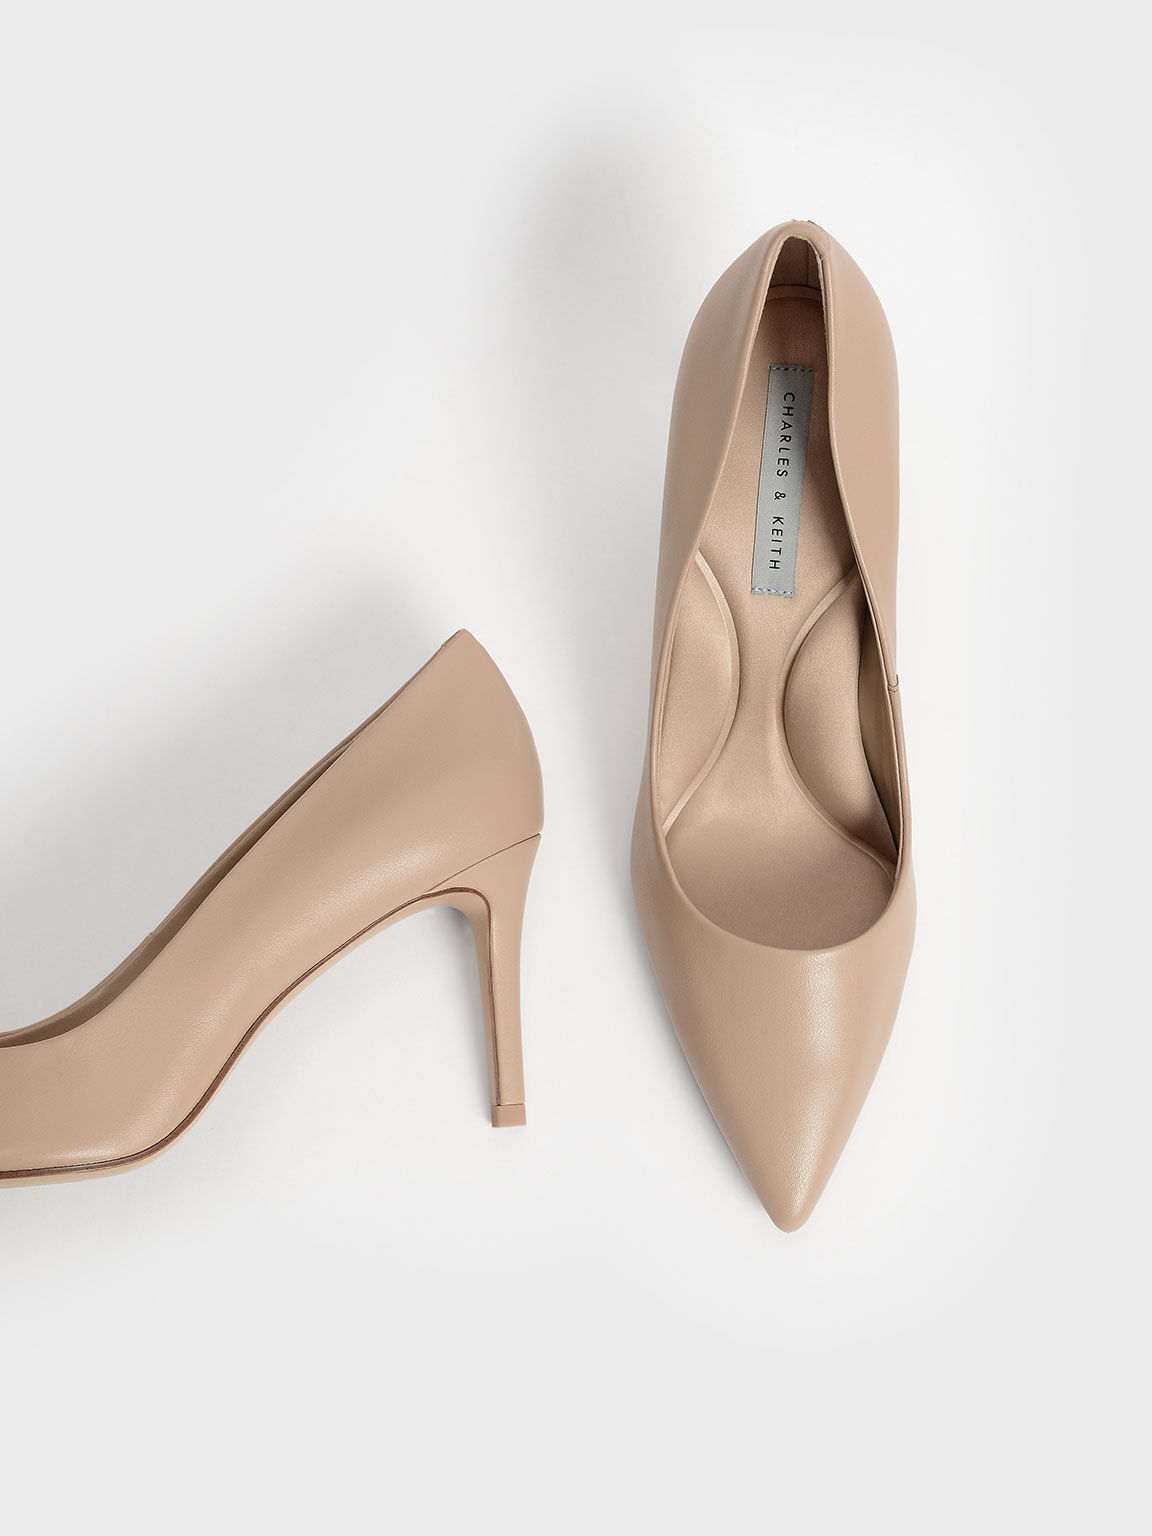 Shop Women's Heels - Shoes | CHARLES & KEITH | Heels, Shoes women heels,  Womens heels